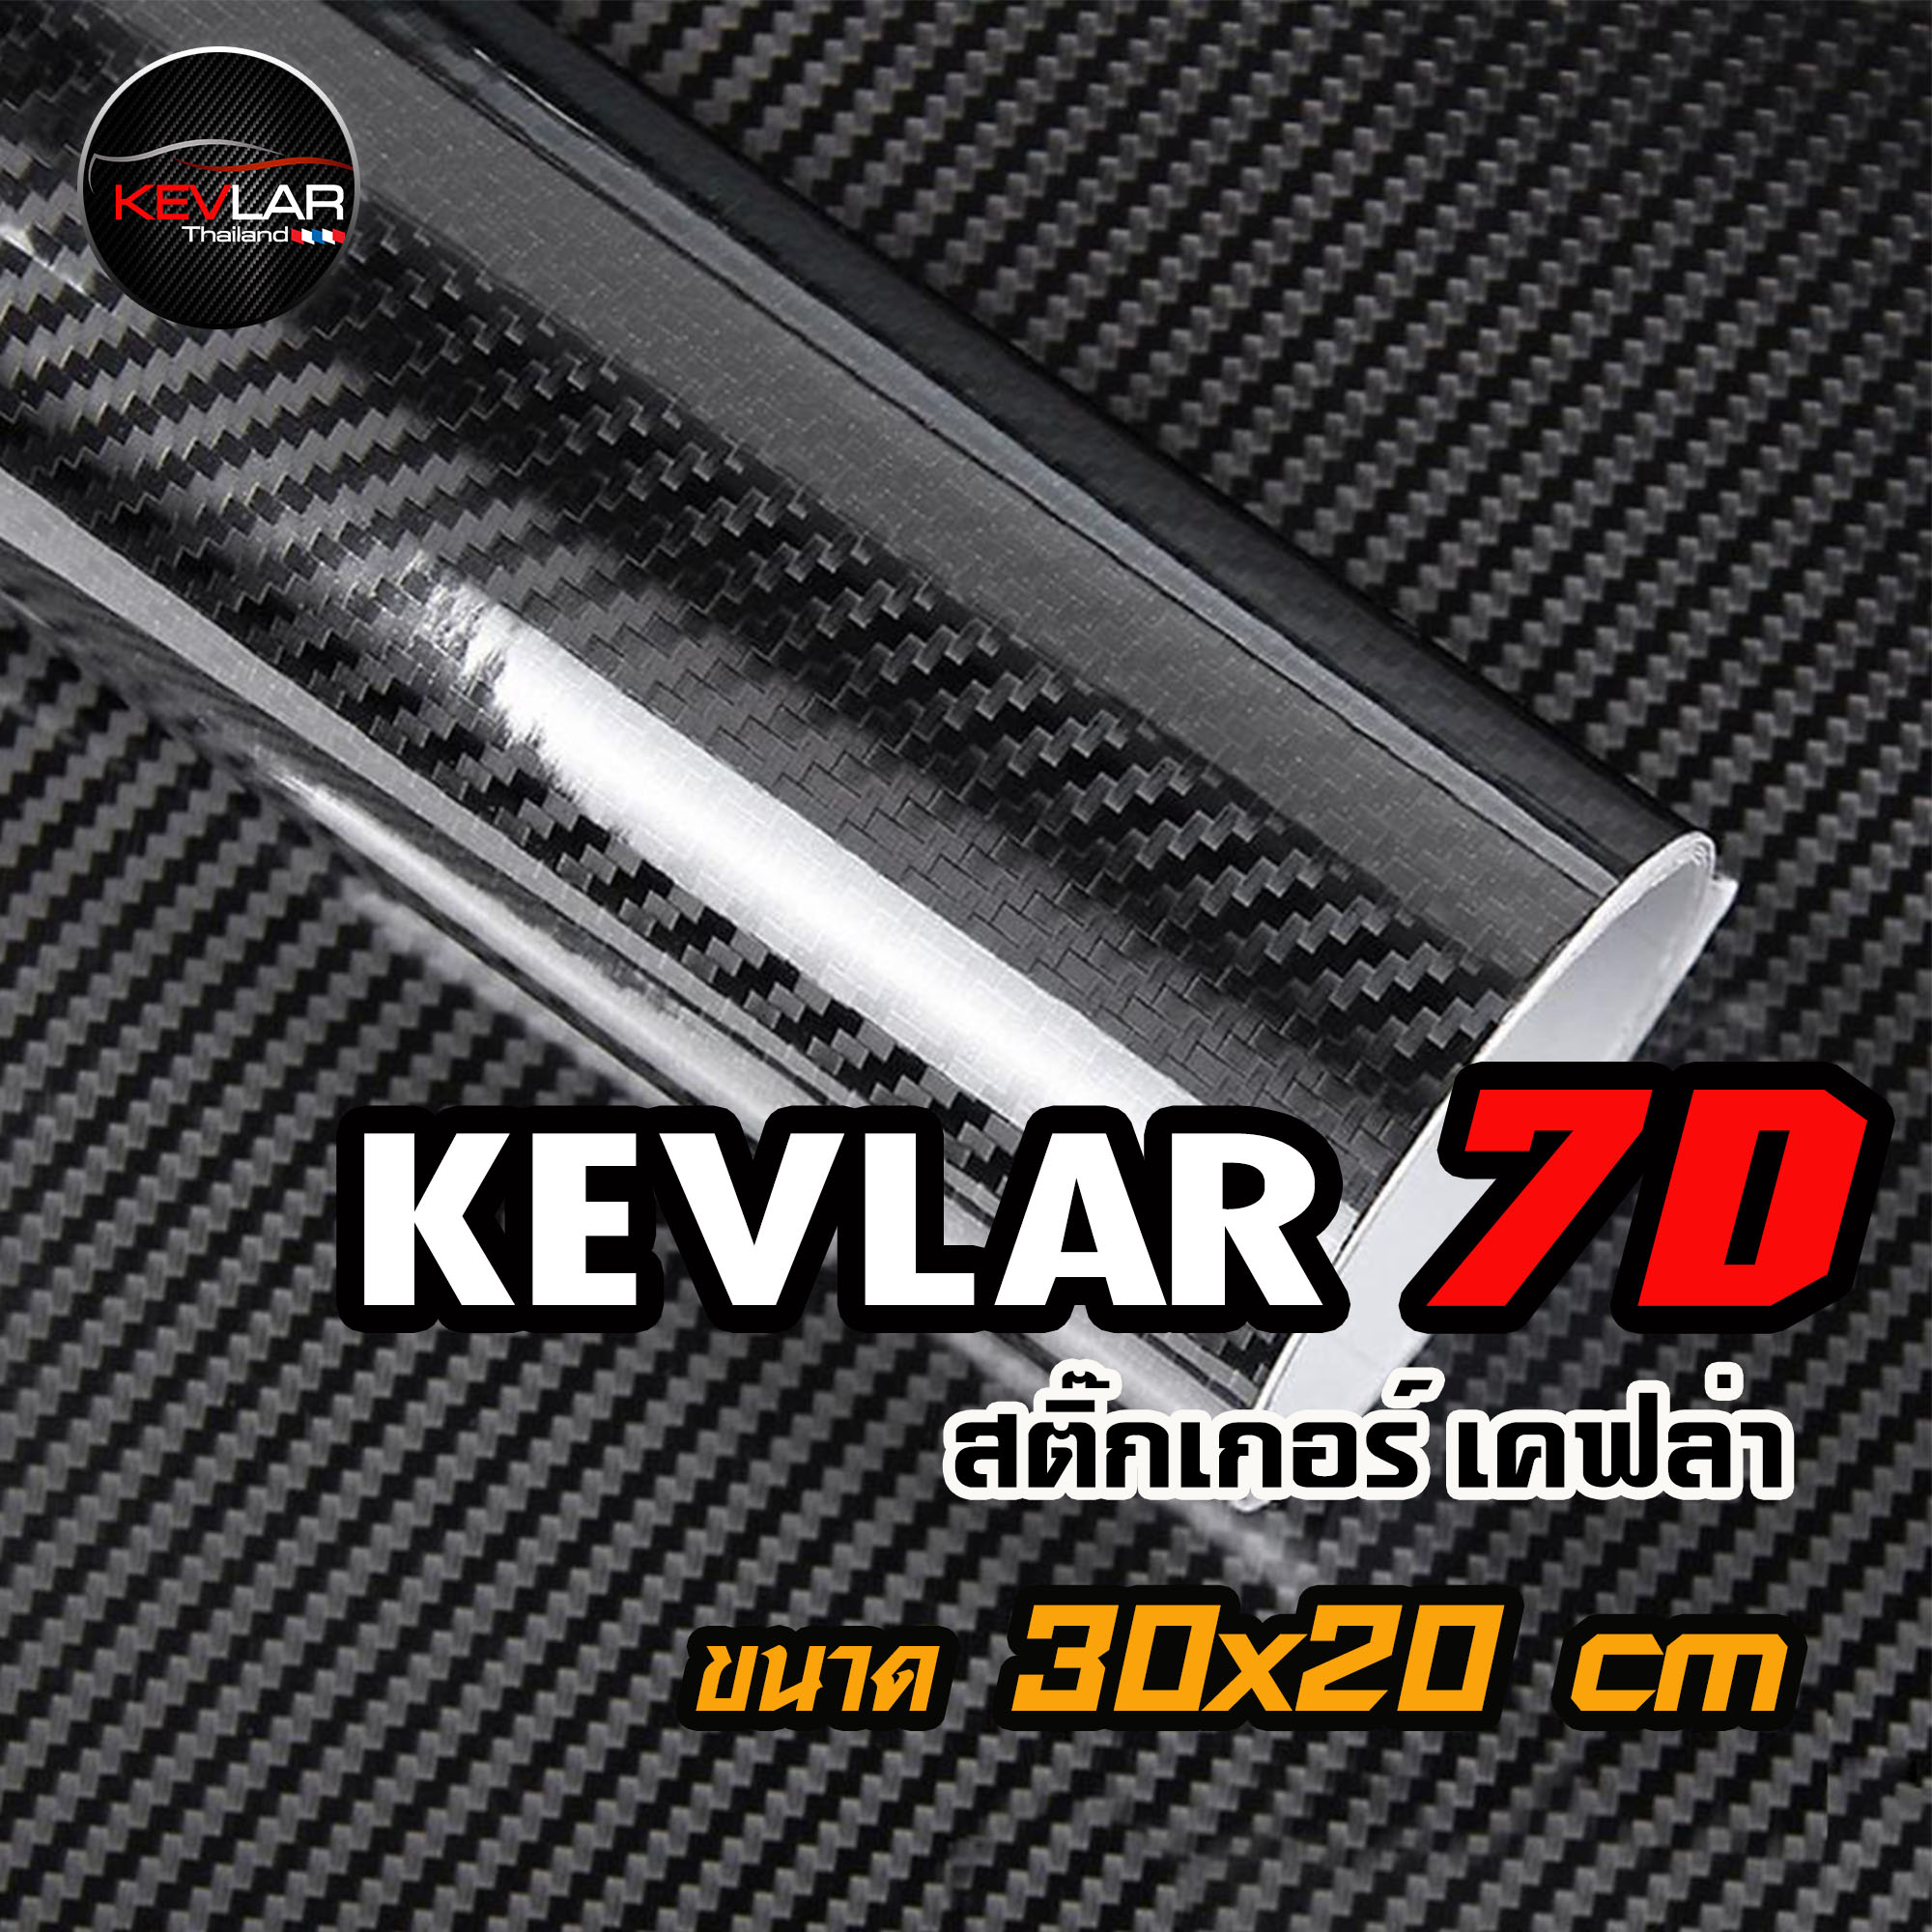 Sticker Kevlar carbon สติ๊กเกอร์ เคฟล่า คาร์บอน 7D คุณภาพสูง ขนาด 30x20 cm